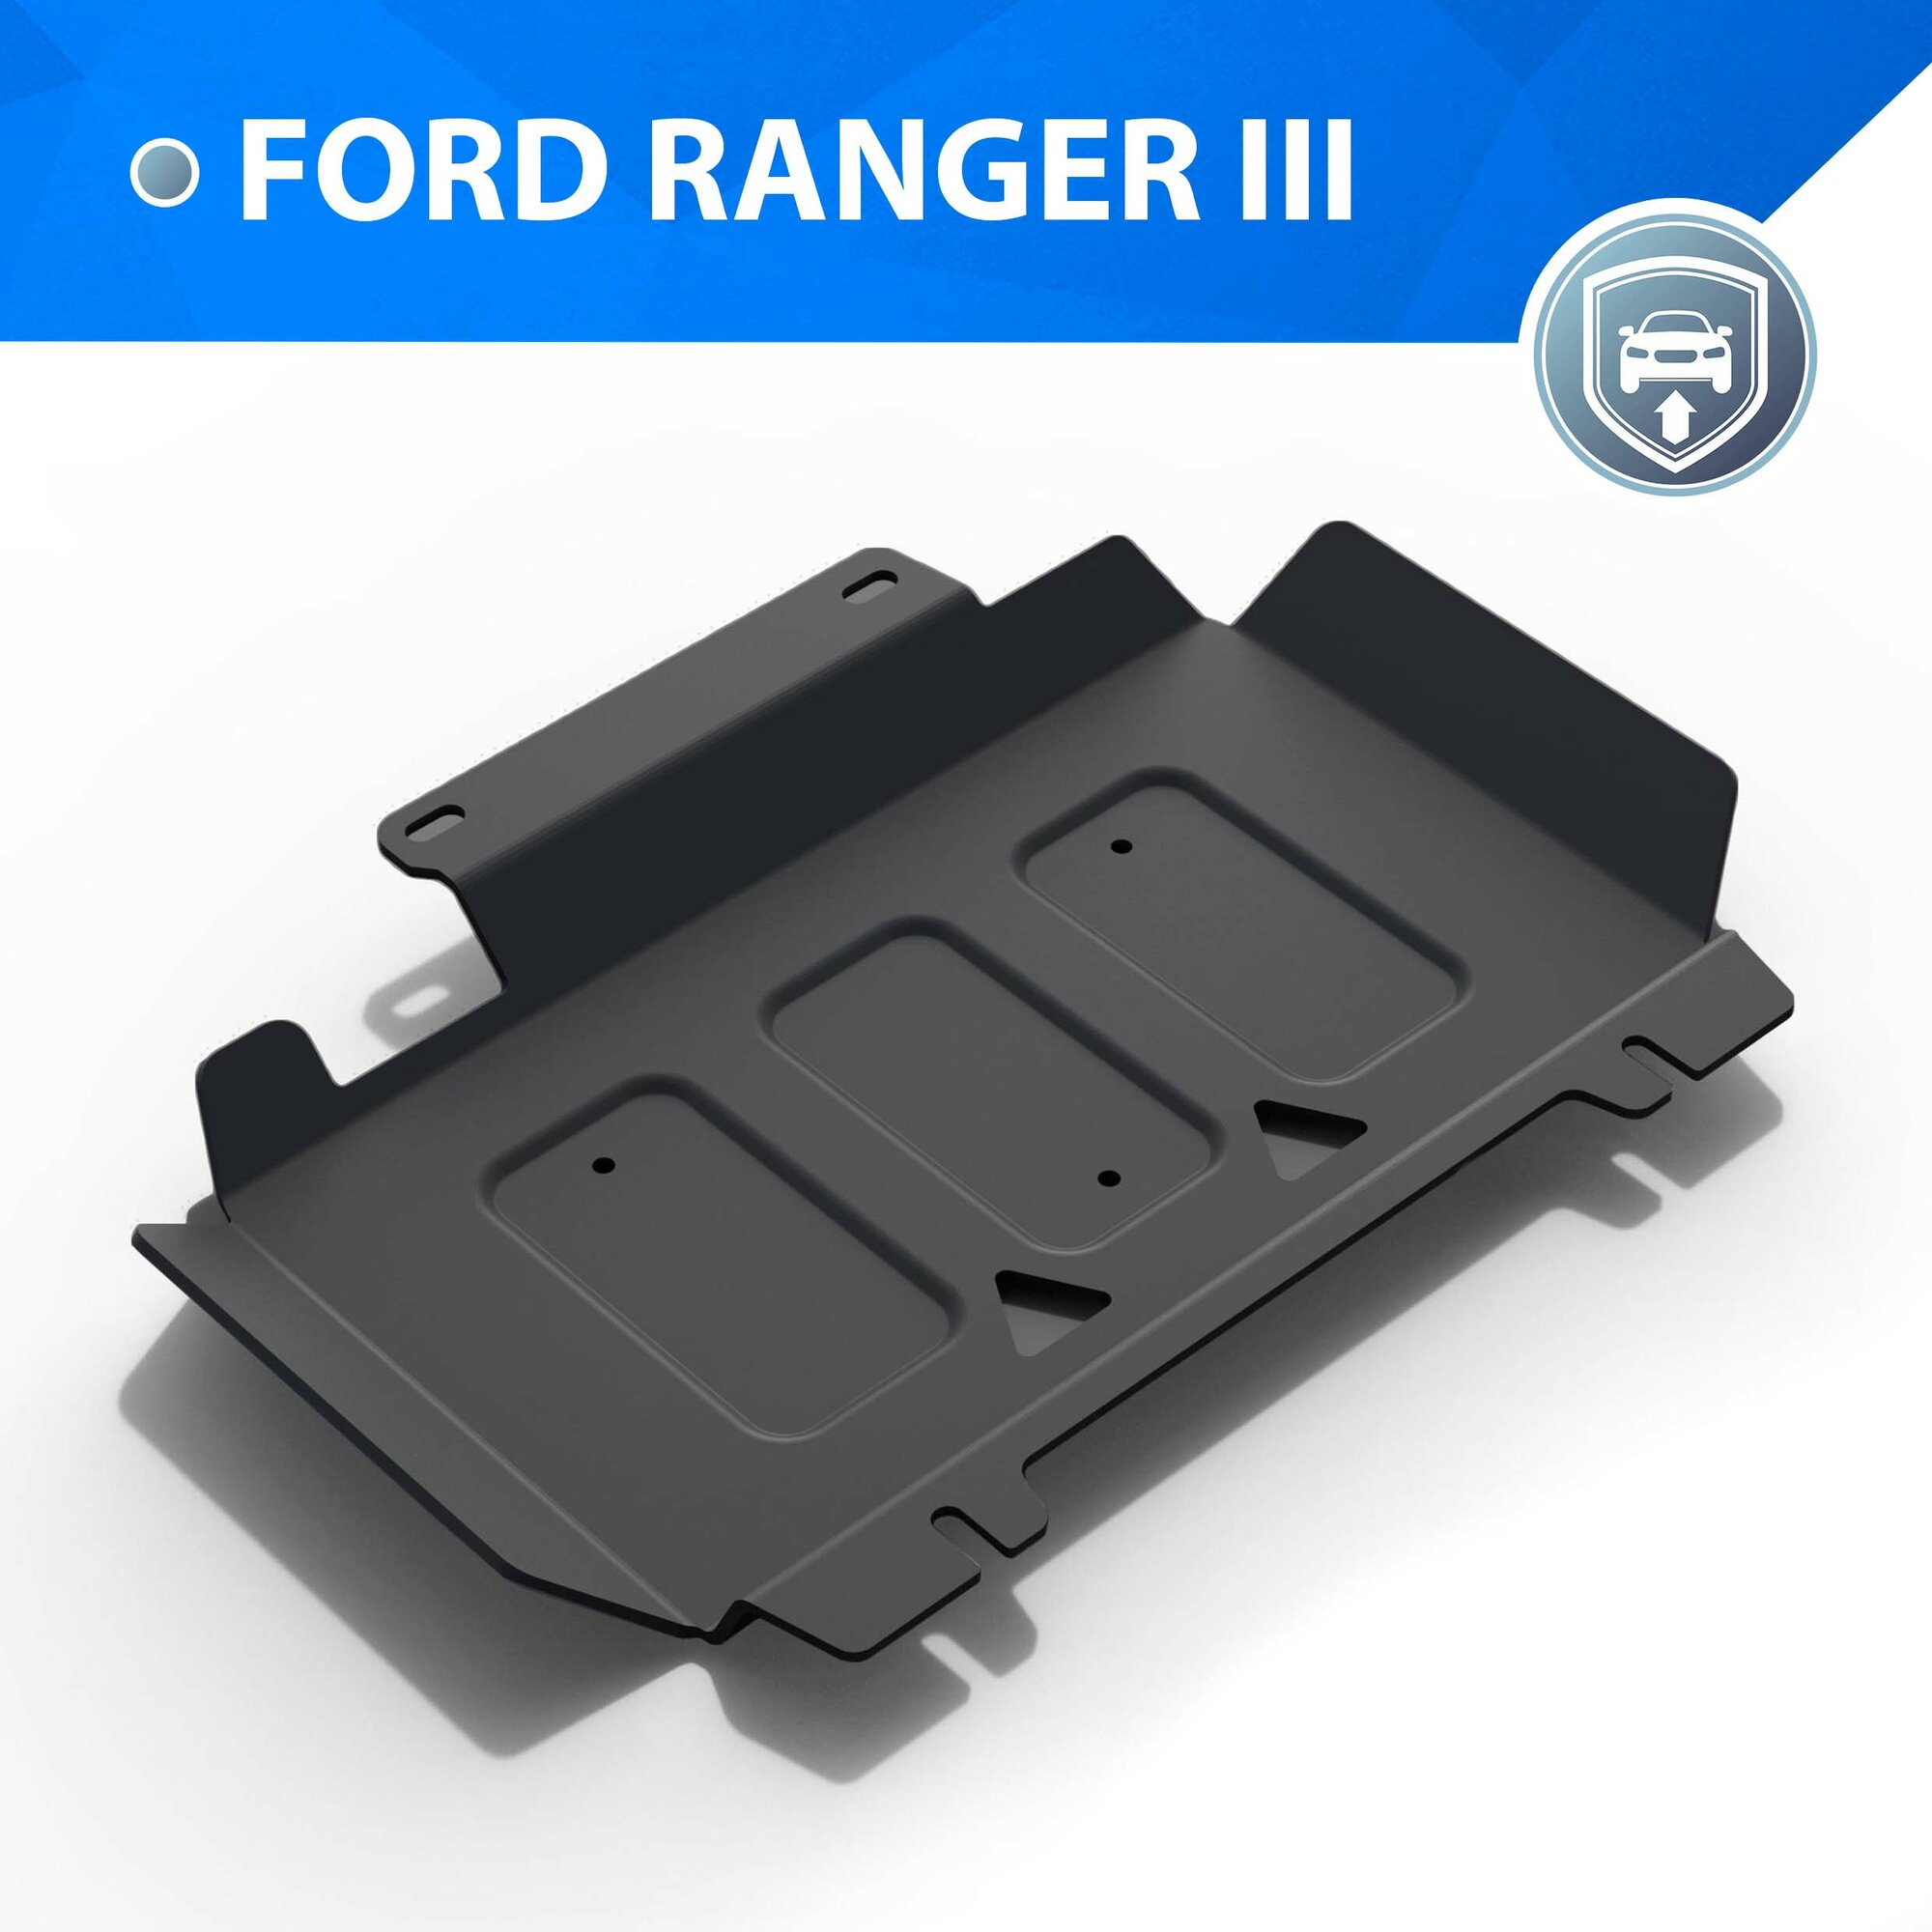 Защита картера Rival для Ford Ranger III (V - 2.2D) 2011-2015, сталь 3 мм (2111.1842.1.3) - фото №1